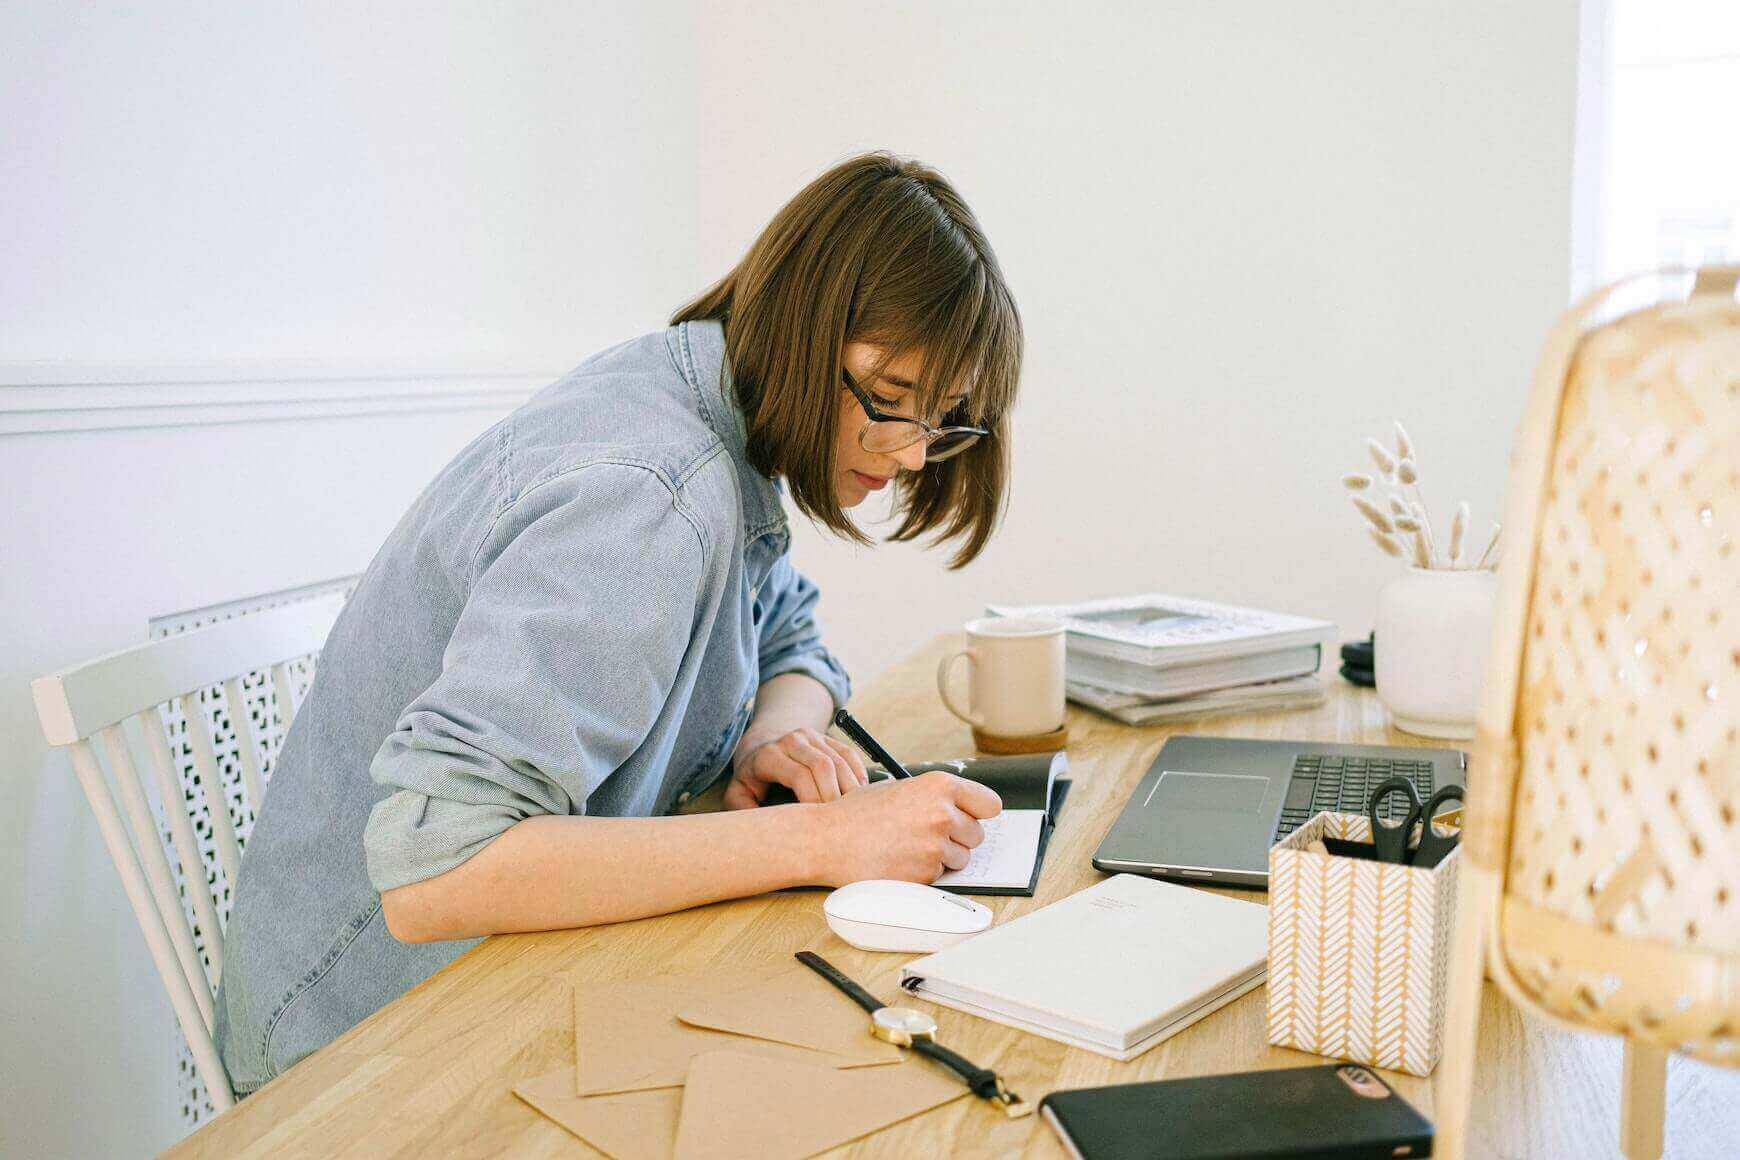 Fata in camasa albastra, aplecata deasupra unui caiet, la birou